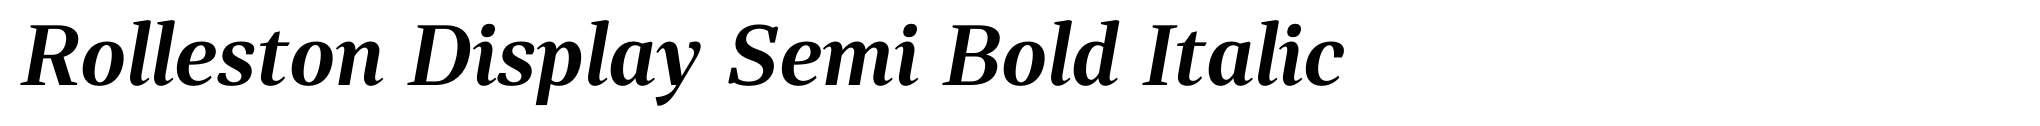 Rolleston Display Semi Bold Italic image